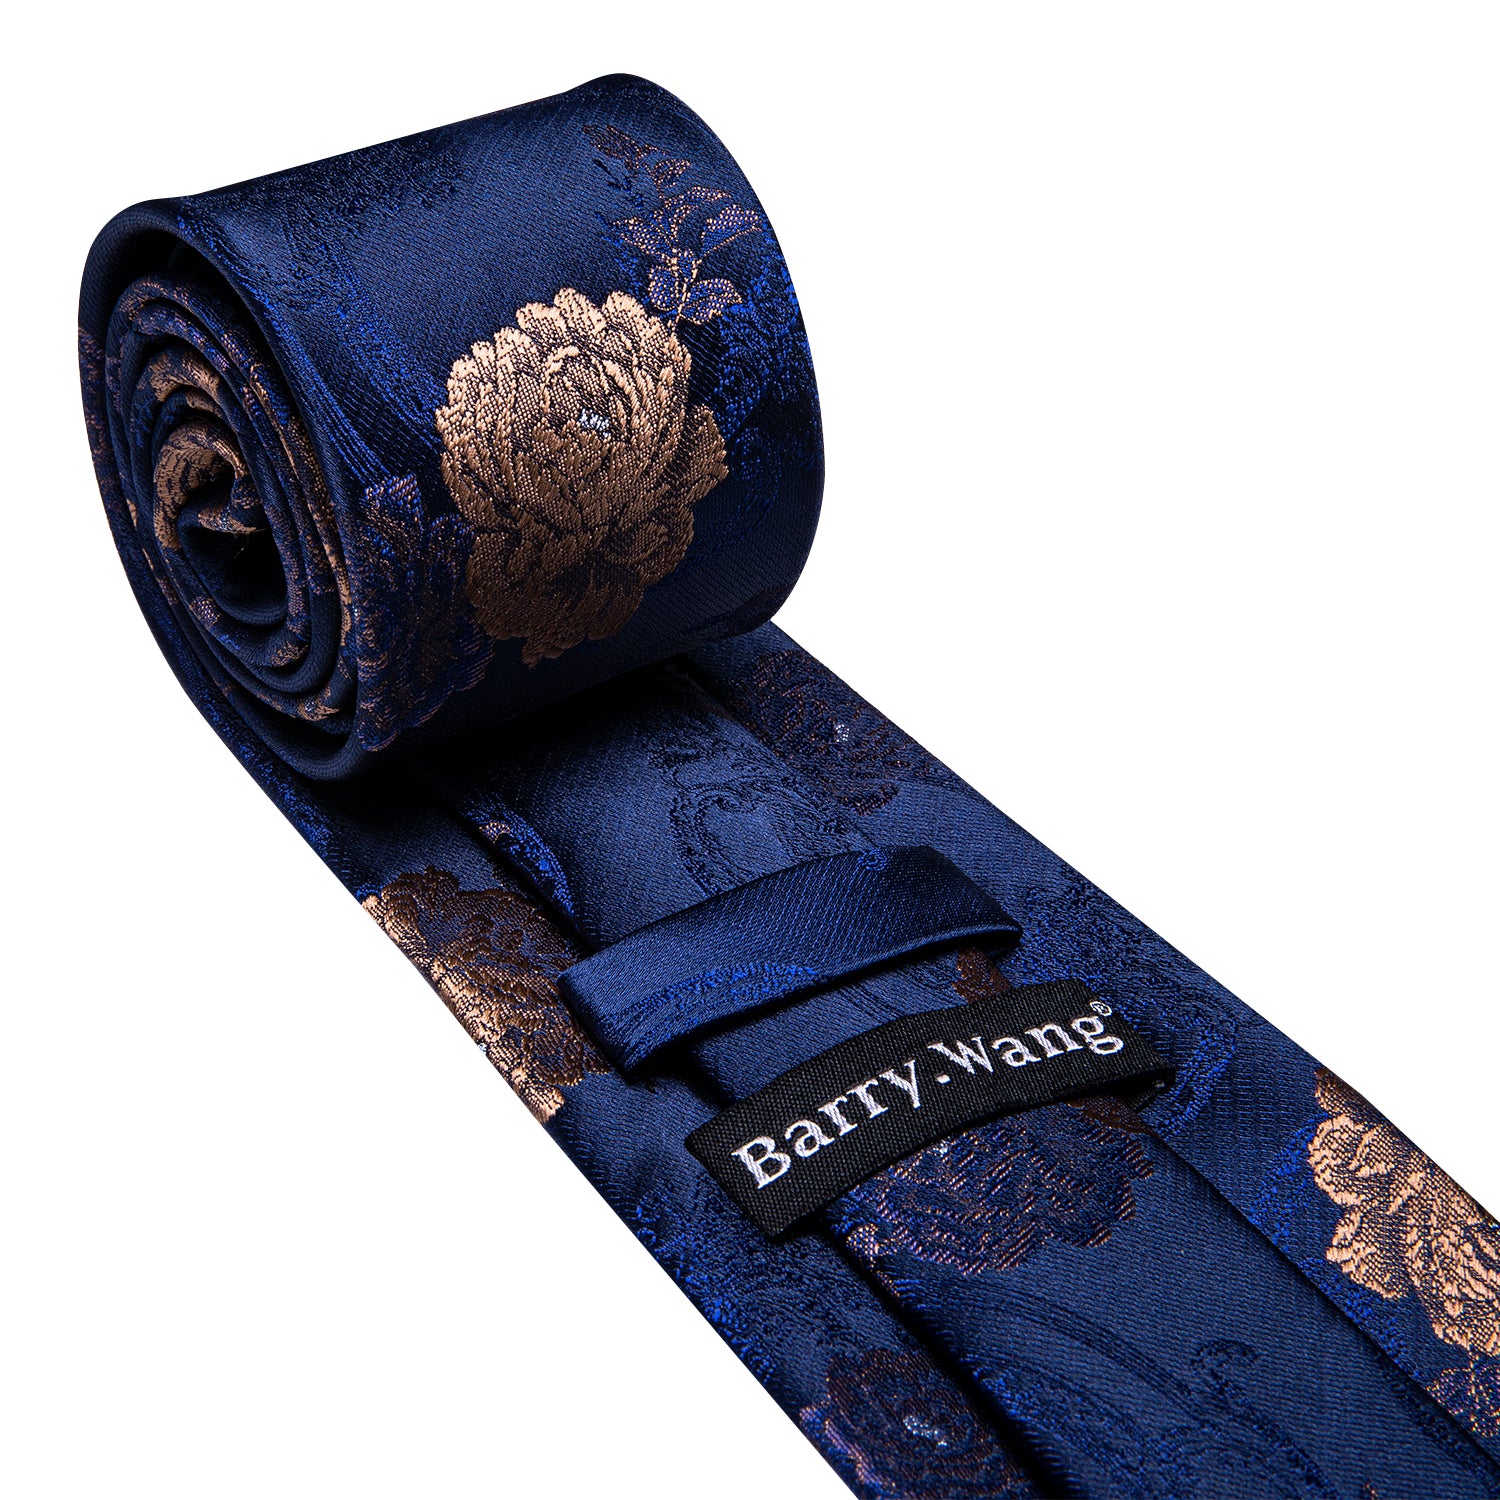 Deep Blue Tie Gold Floral Tie Pocket Square Cufflinks Set